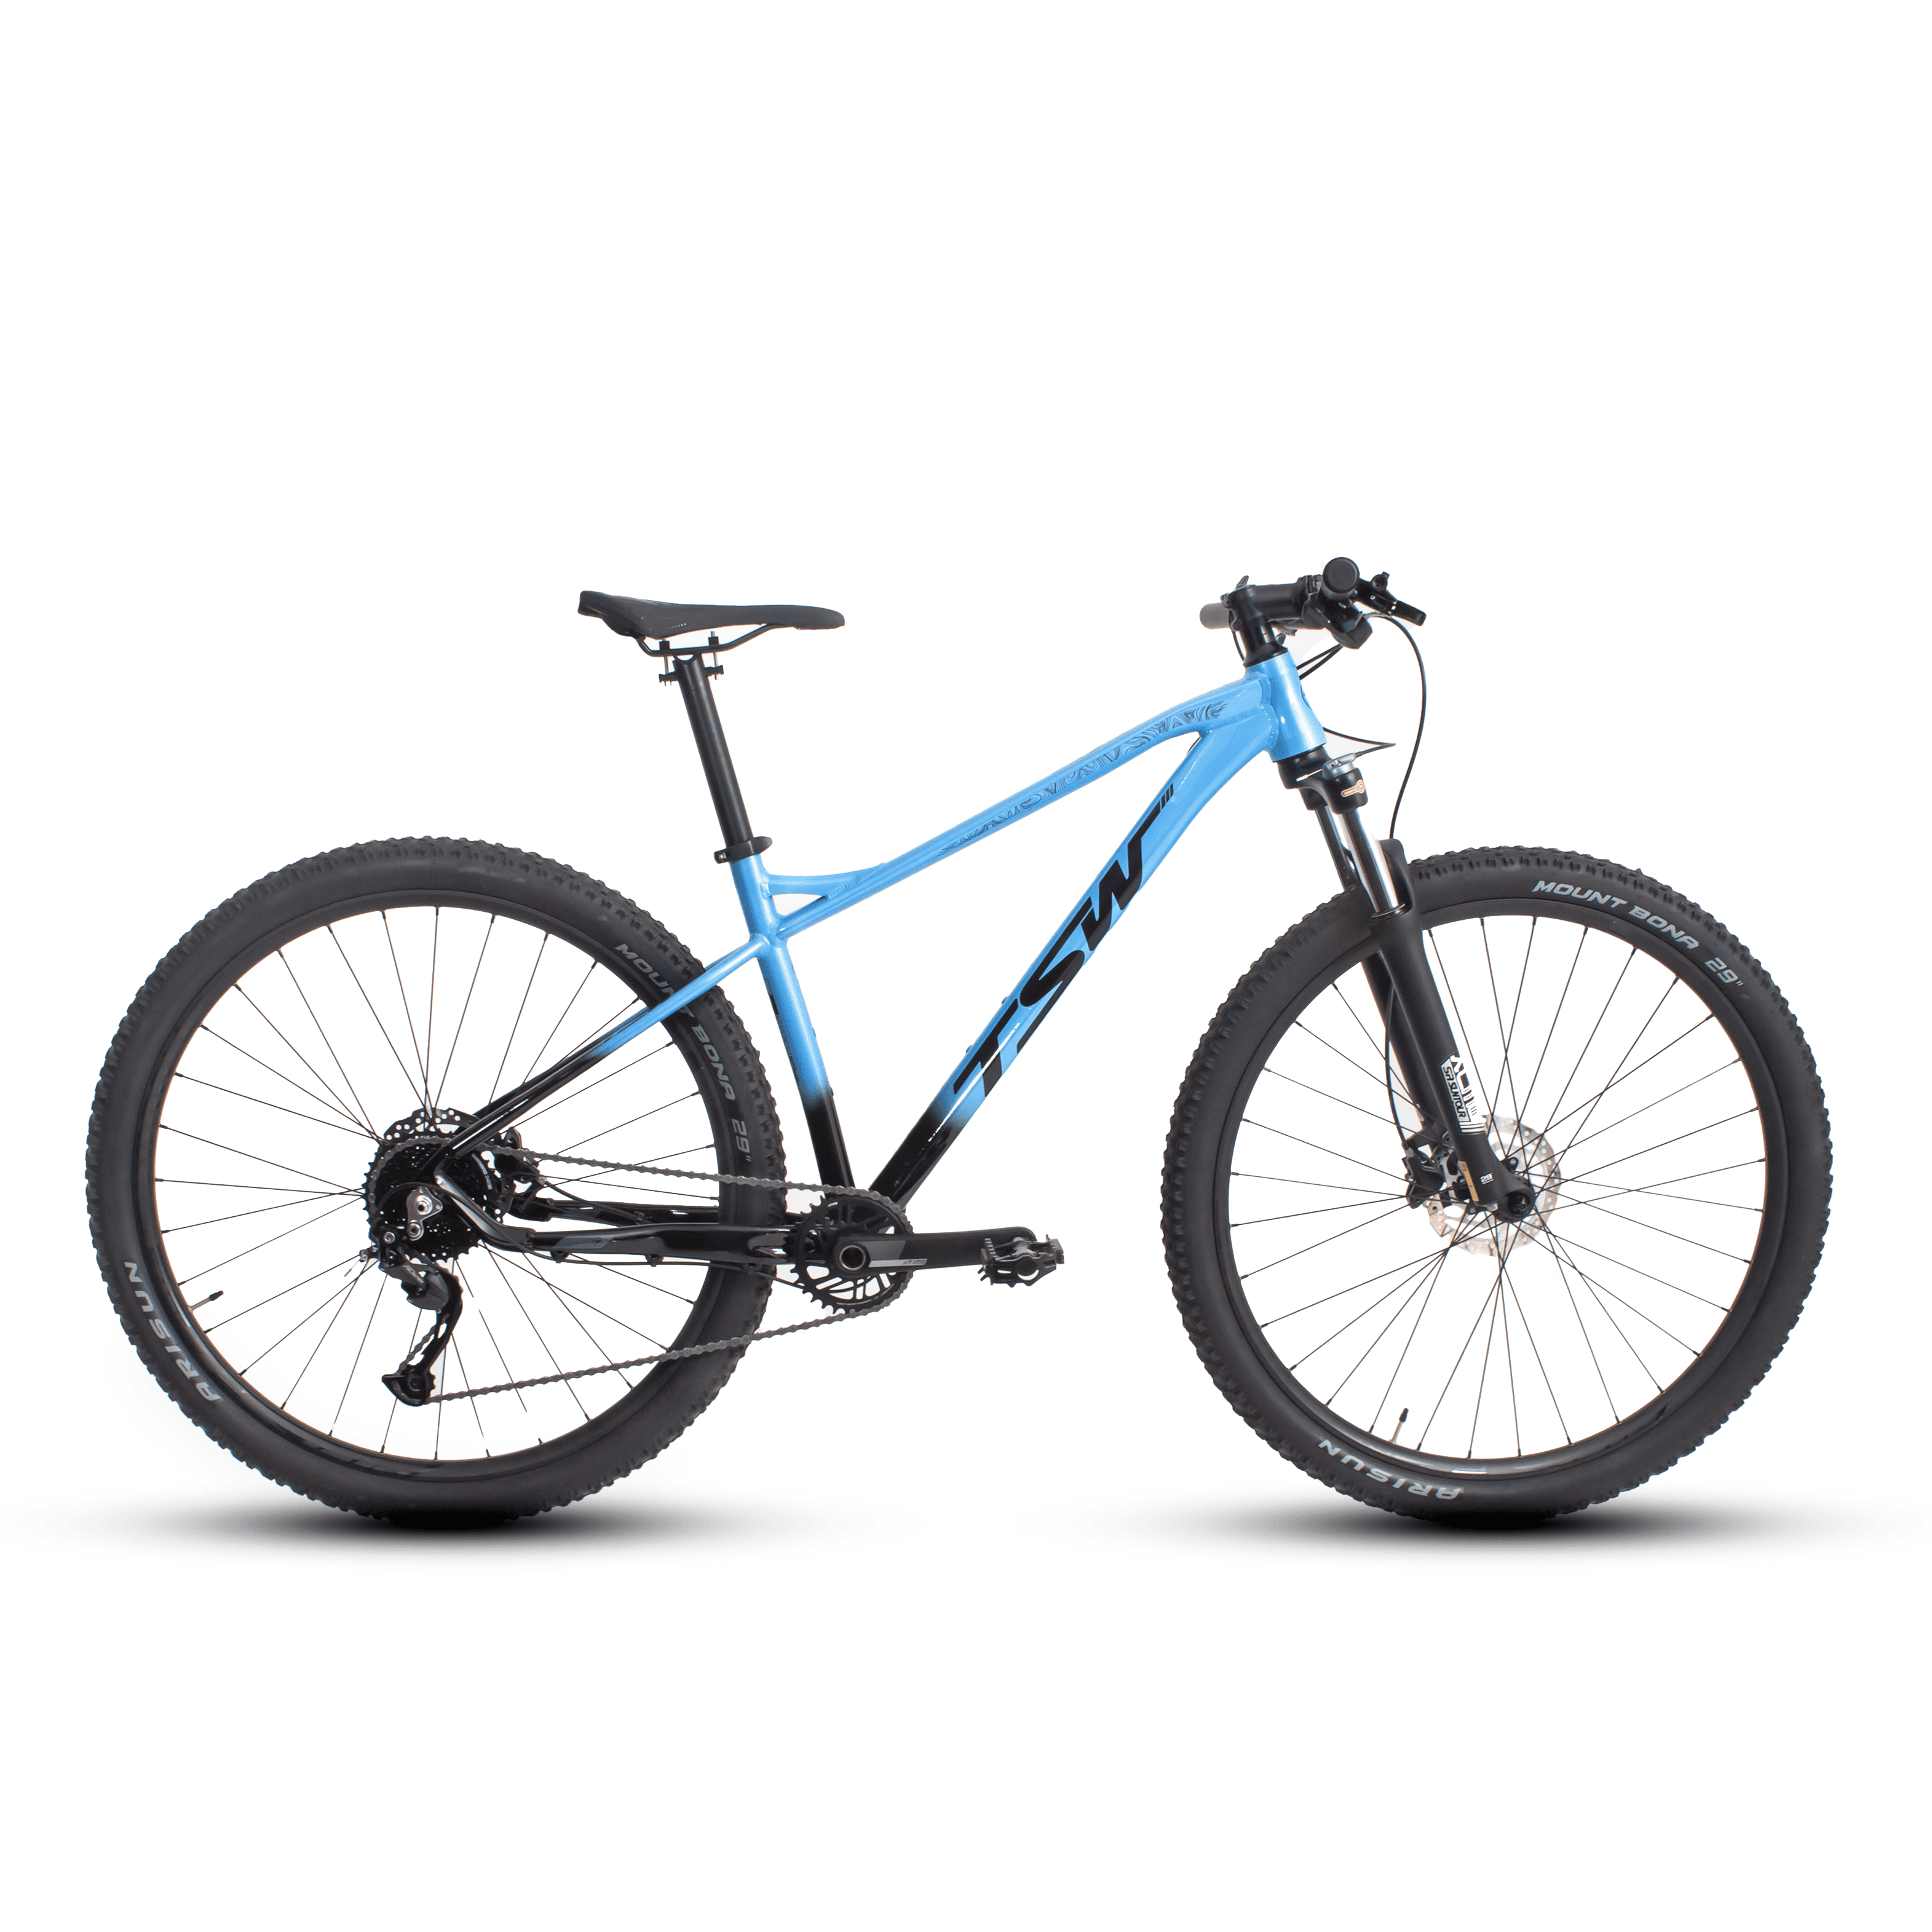 Bicicleta TSW Stamina | SR Suntour - 21", Azul/Preto